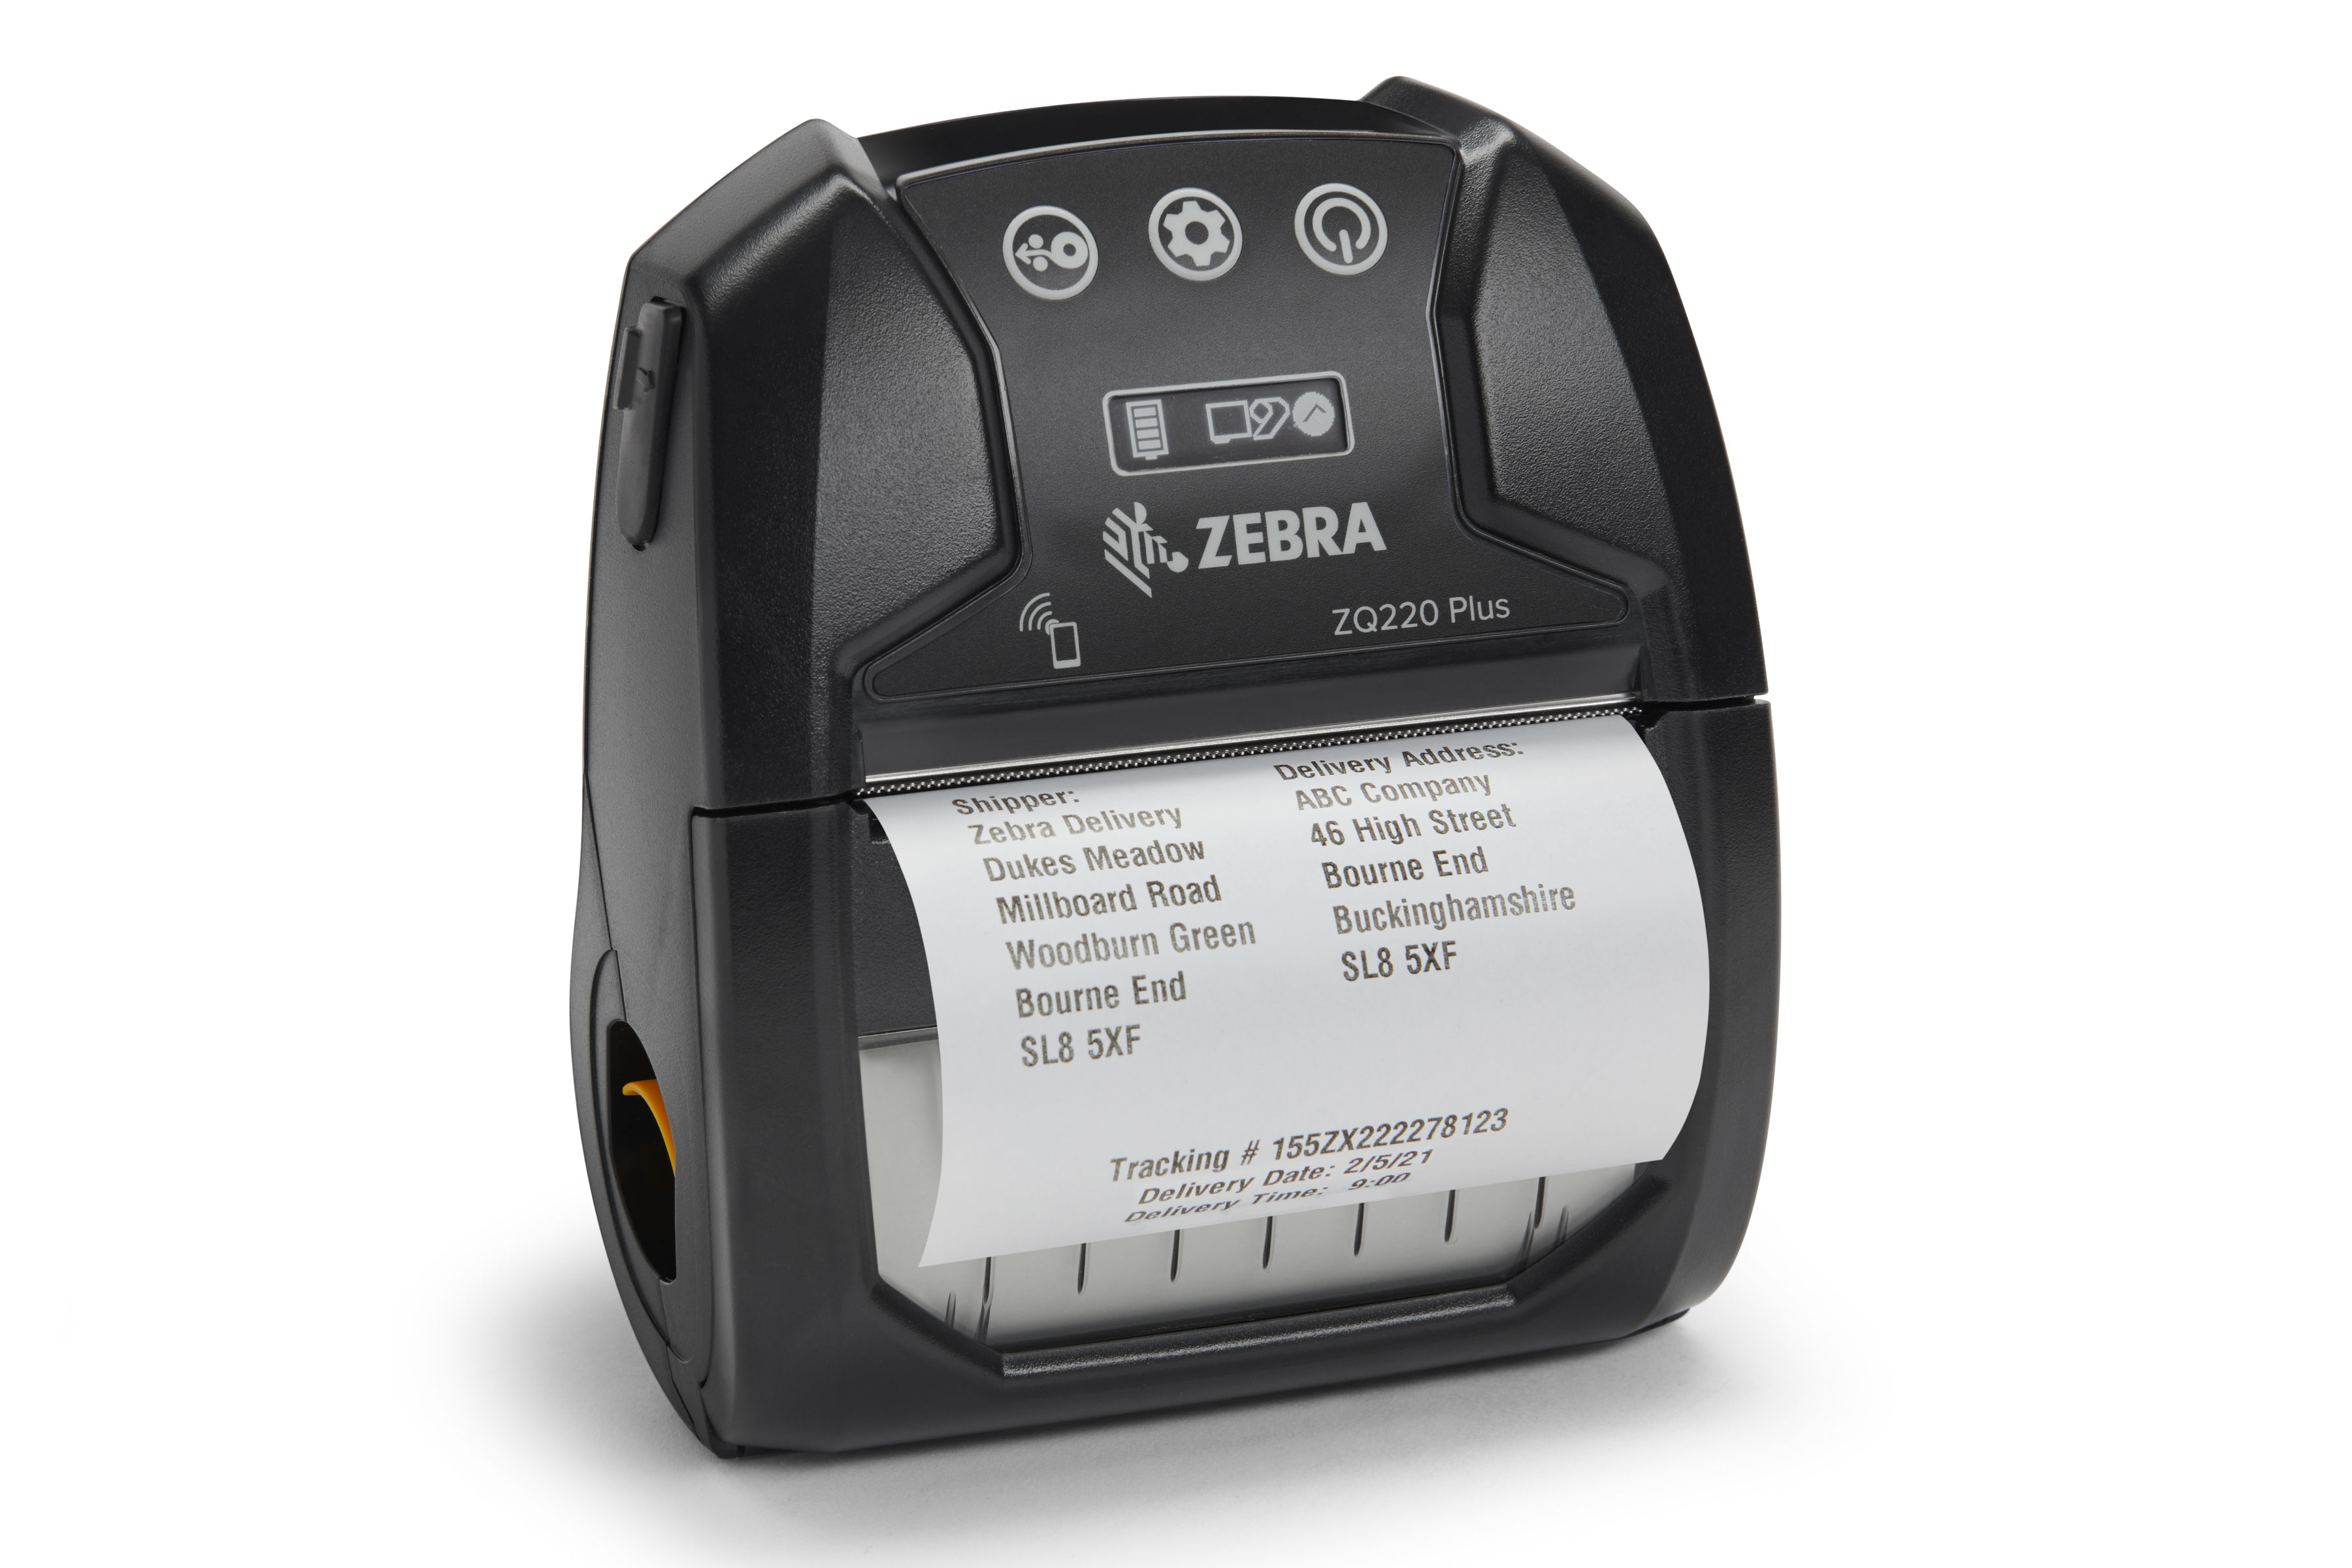 Zq200 Series Mobile Printers Zebra 3630